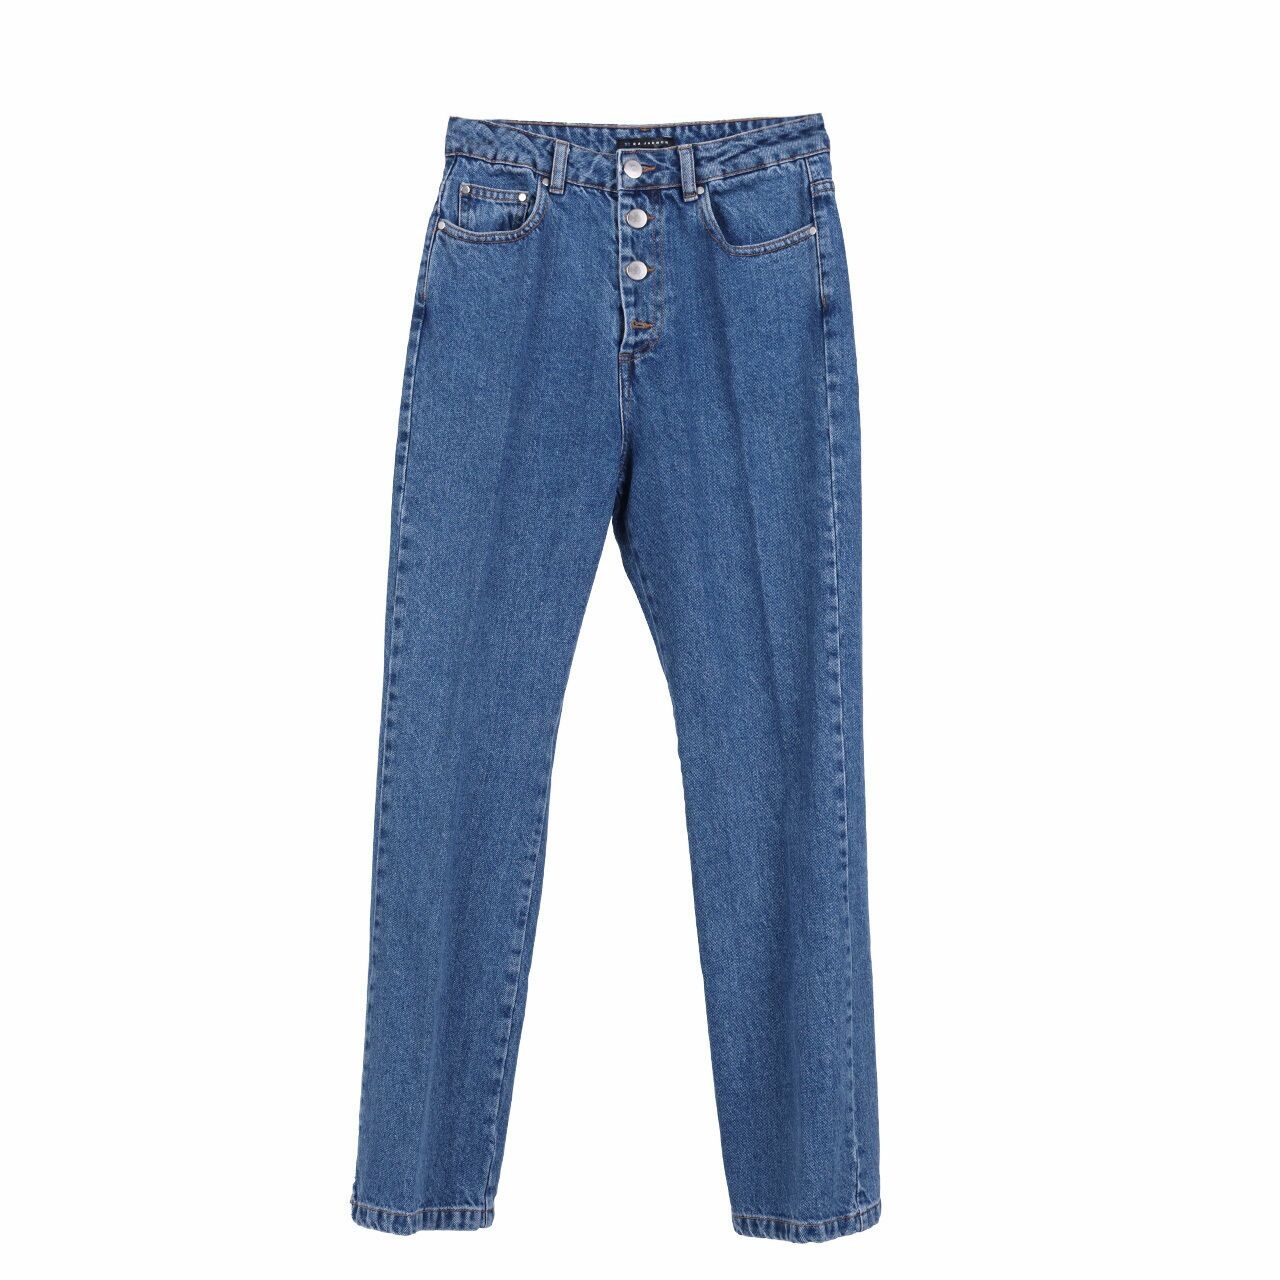 Tara Jarmon Blue Long Pants Jeans